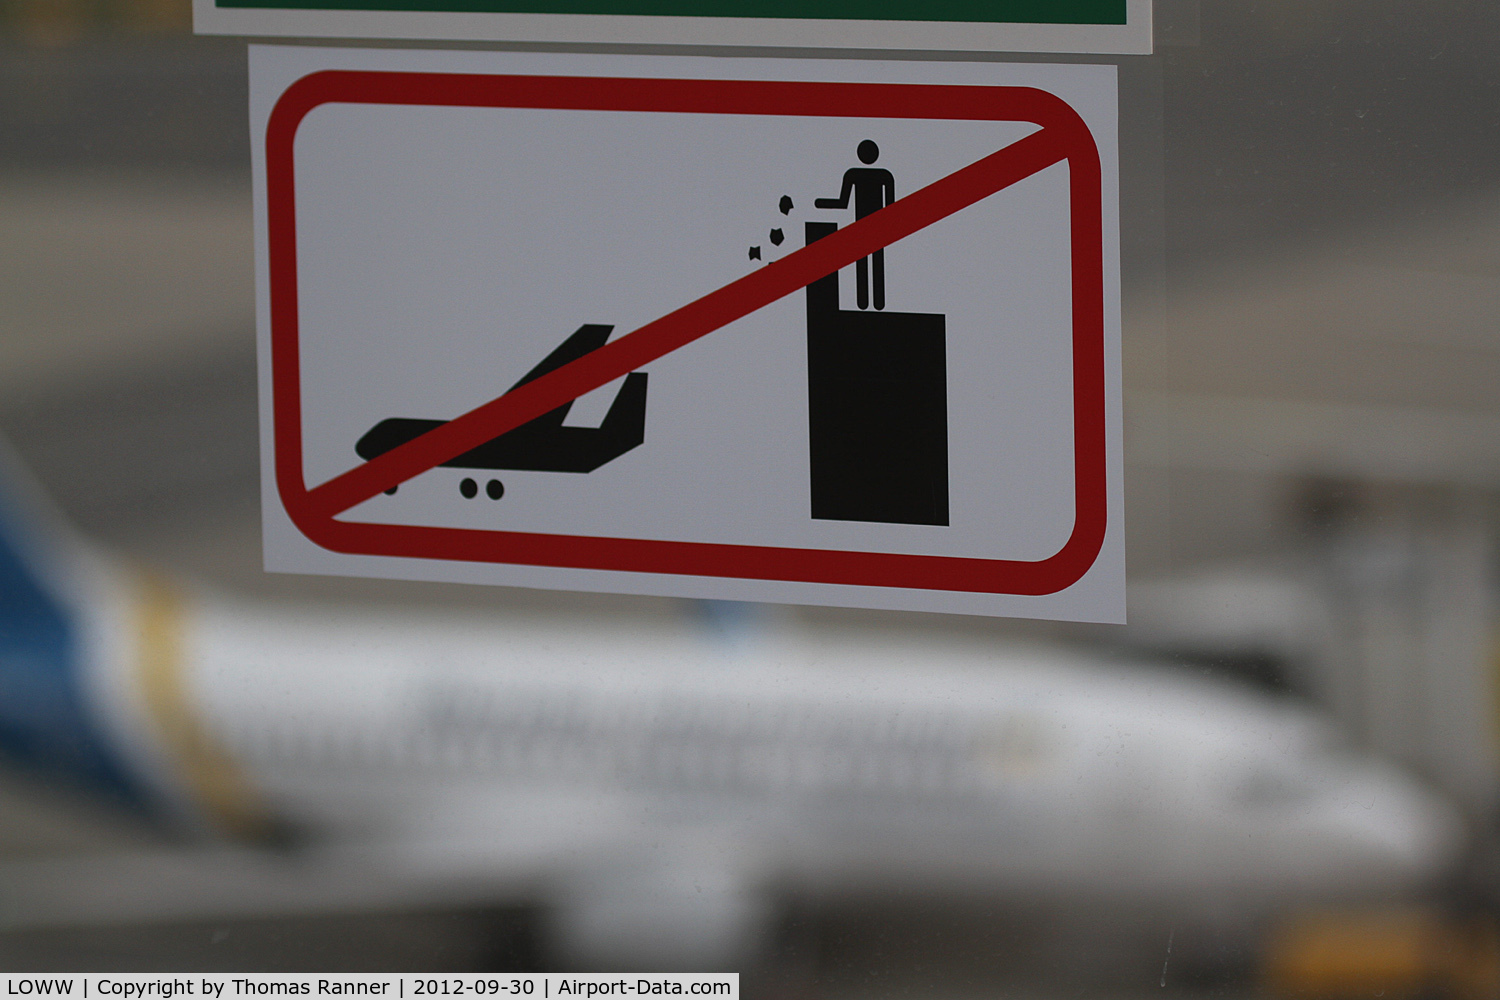 Vienna International Airport, Vienna Austria (LOWW) - Do not feed the planes...